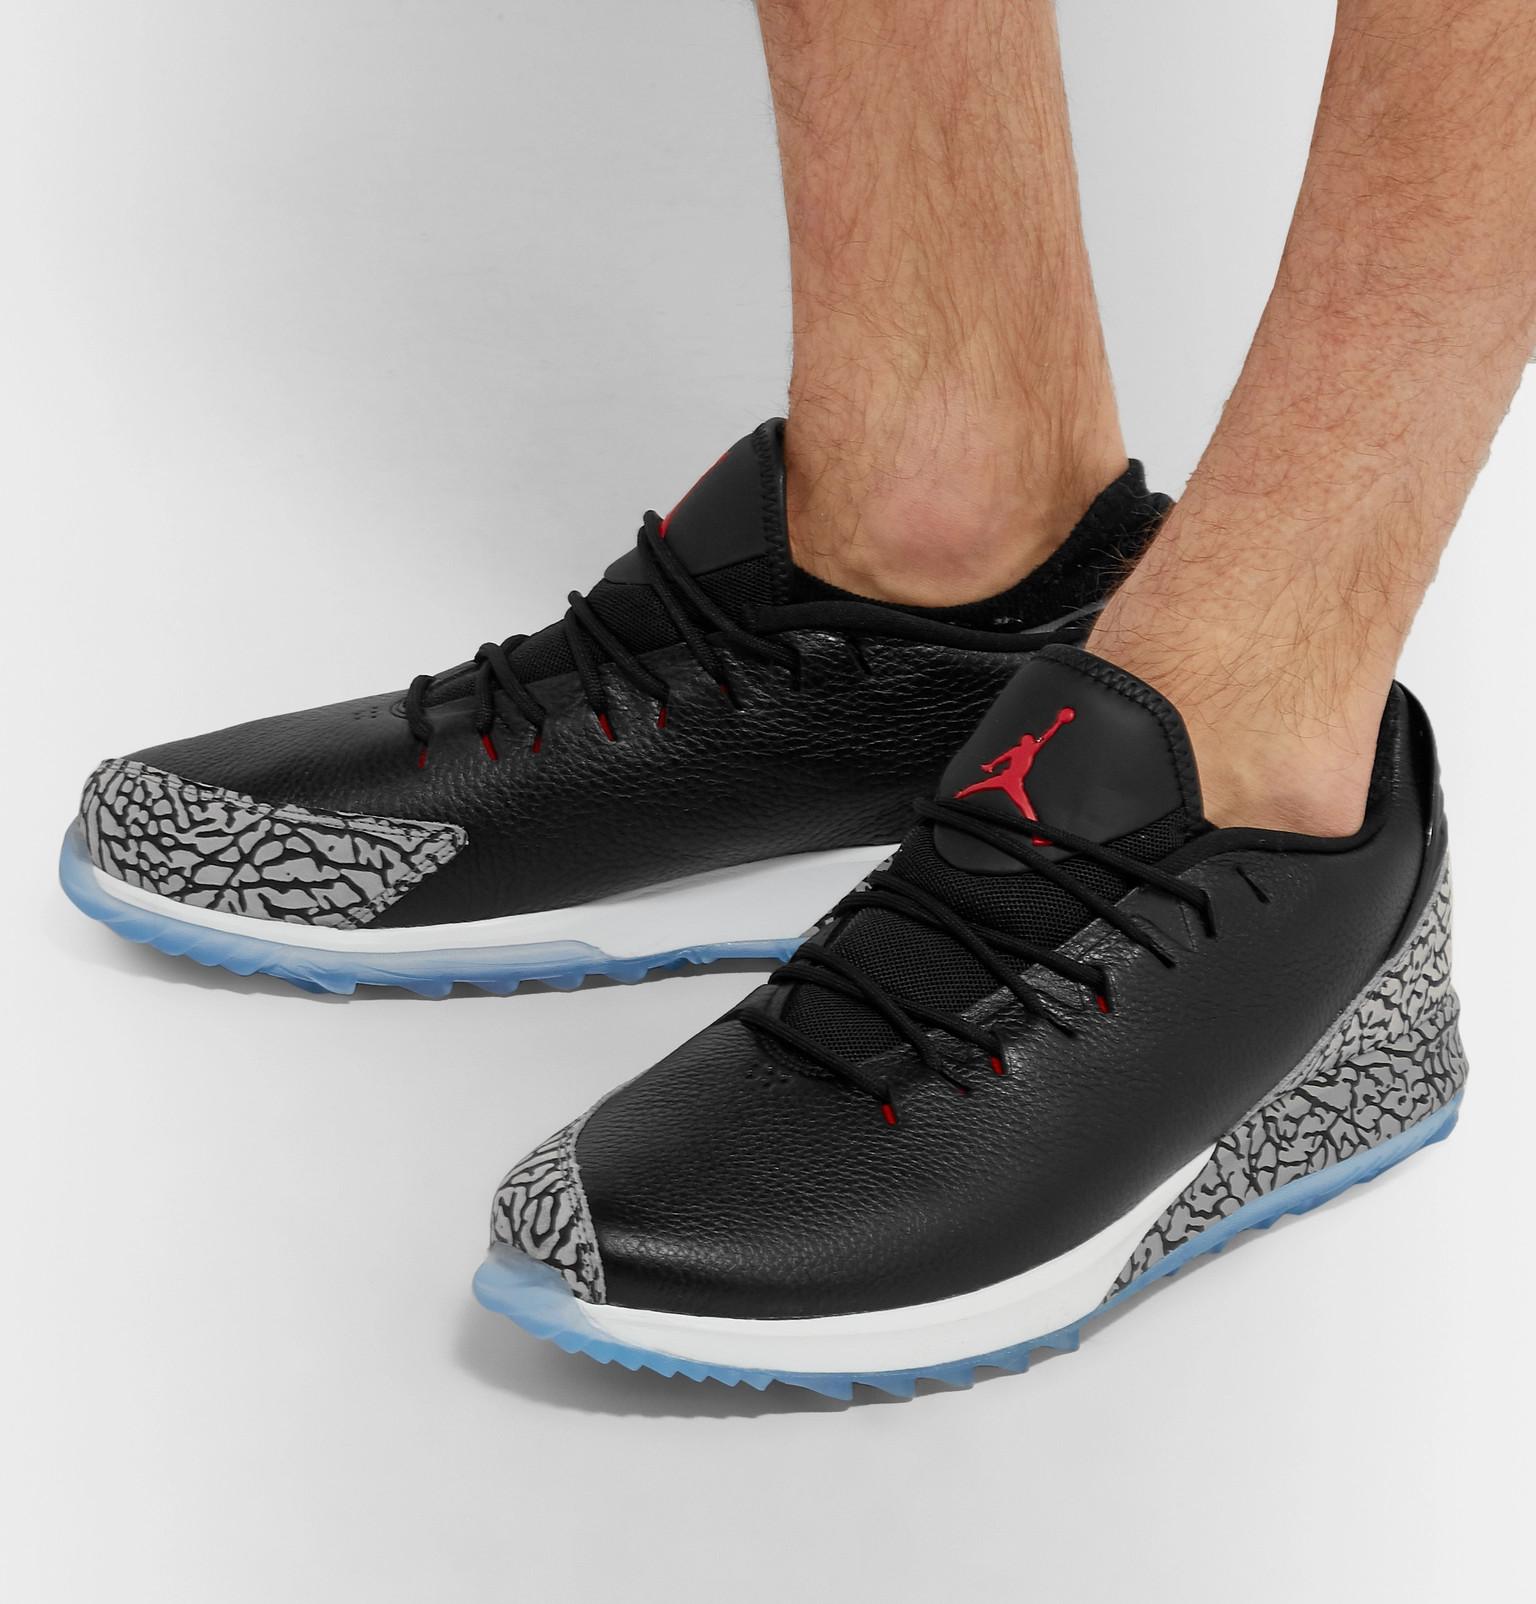 Nike Jordan Adg Leather And Mesh Golf Shoes in Black for Men - Lyst